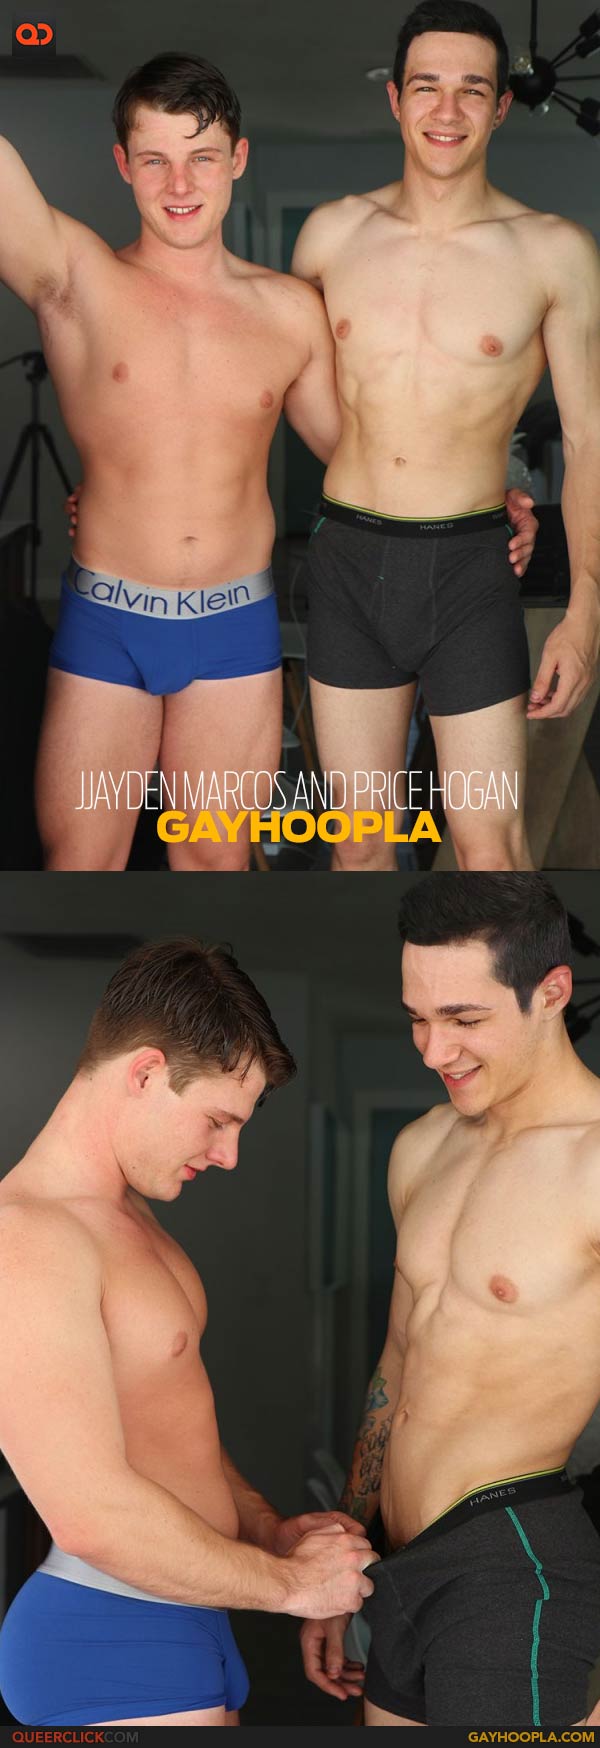 GayHoopla: Jayden Marcos Splits Price Hogan WIDE OPEN!